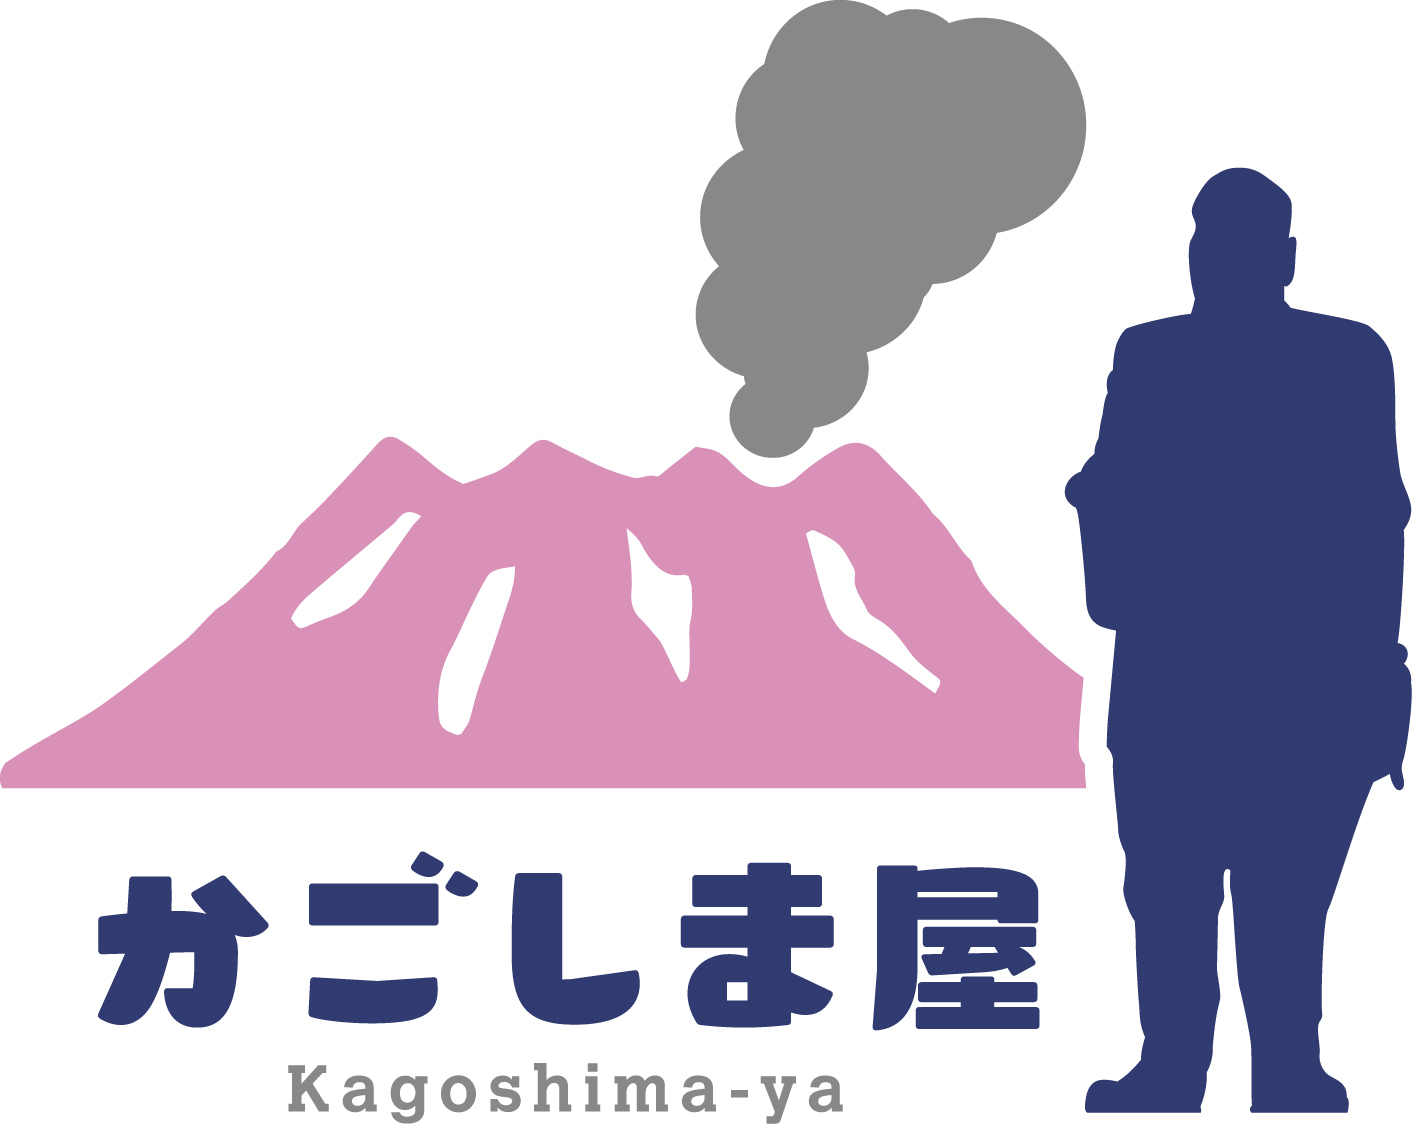 Kagoshimaya